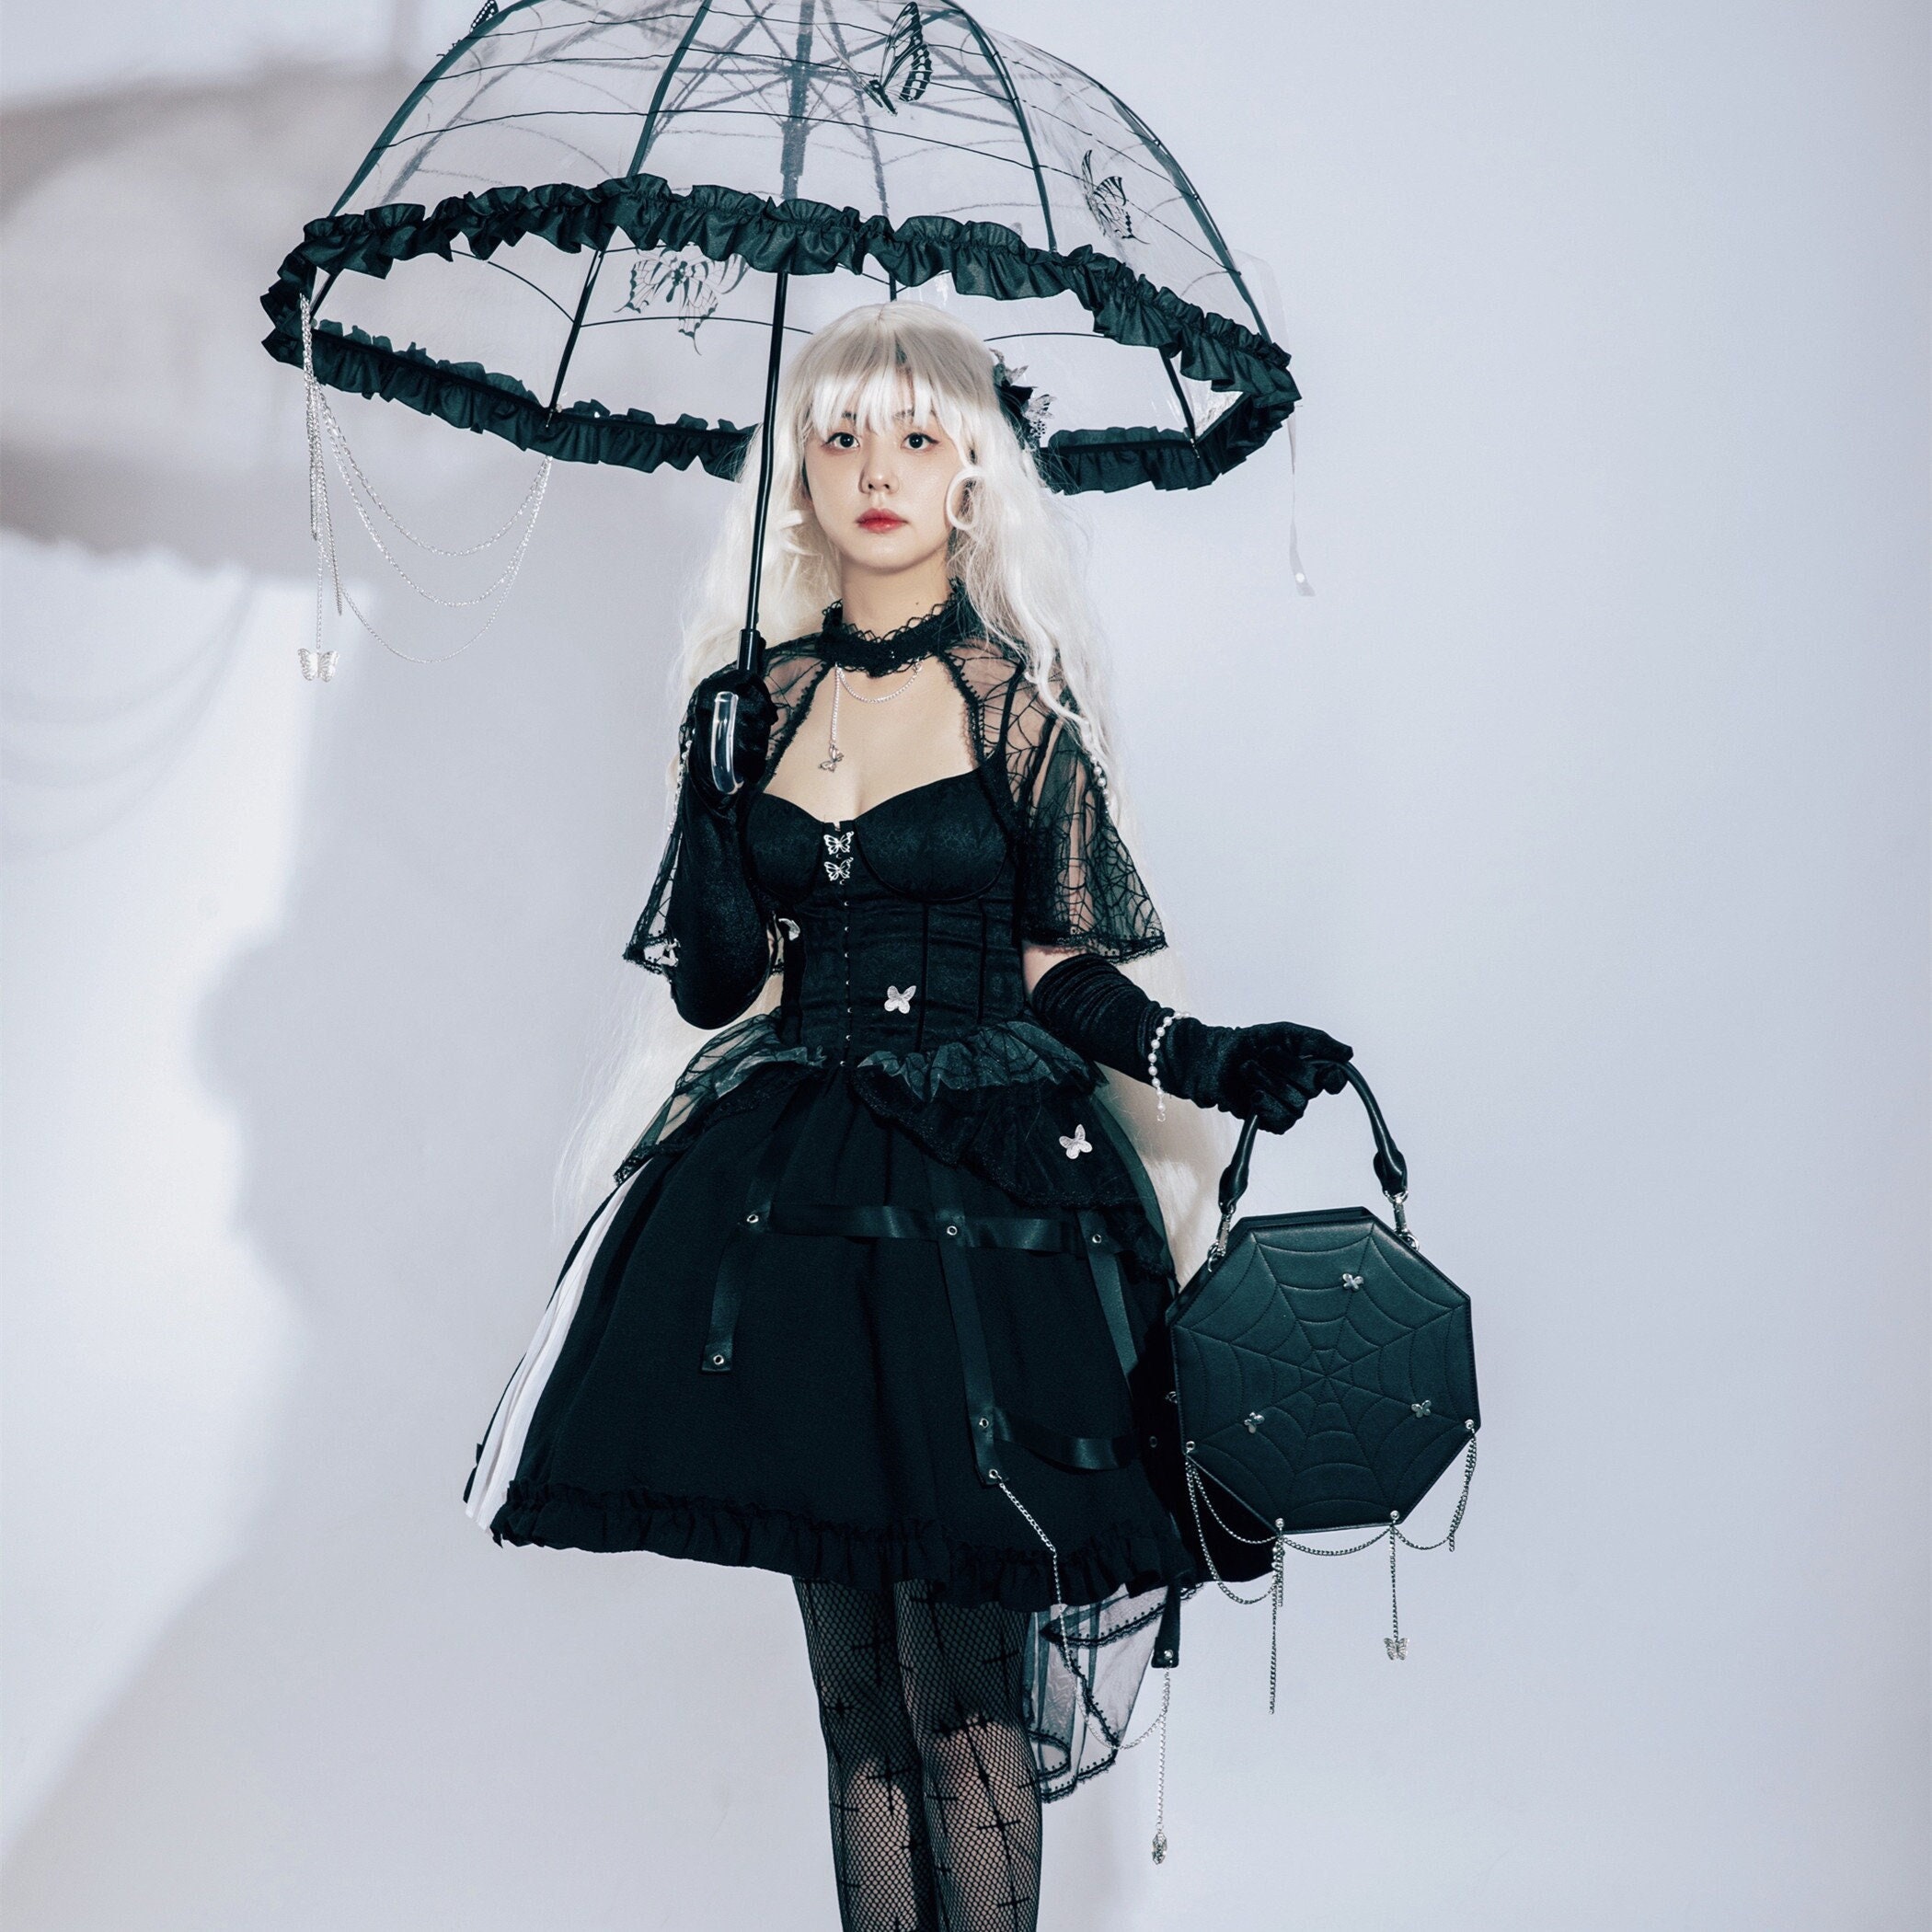 Y2K Gothic Black Steampunk Lolita Party Costume Dress